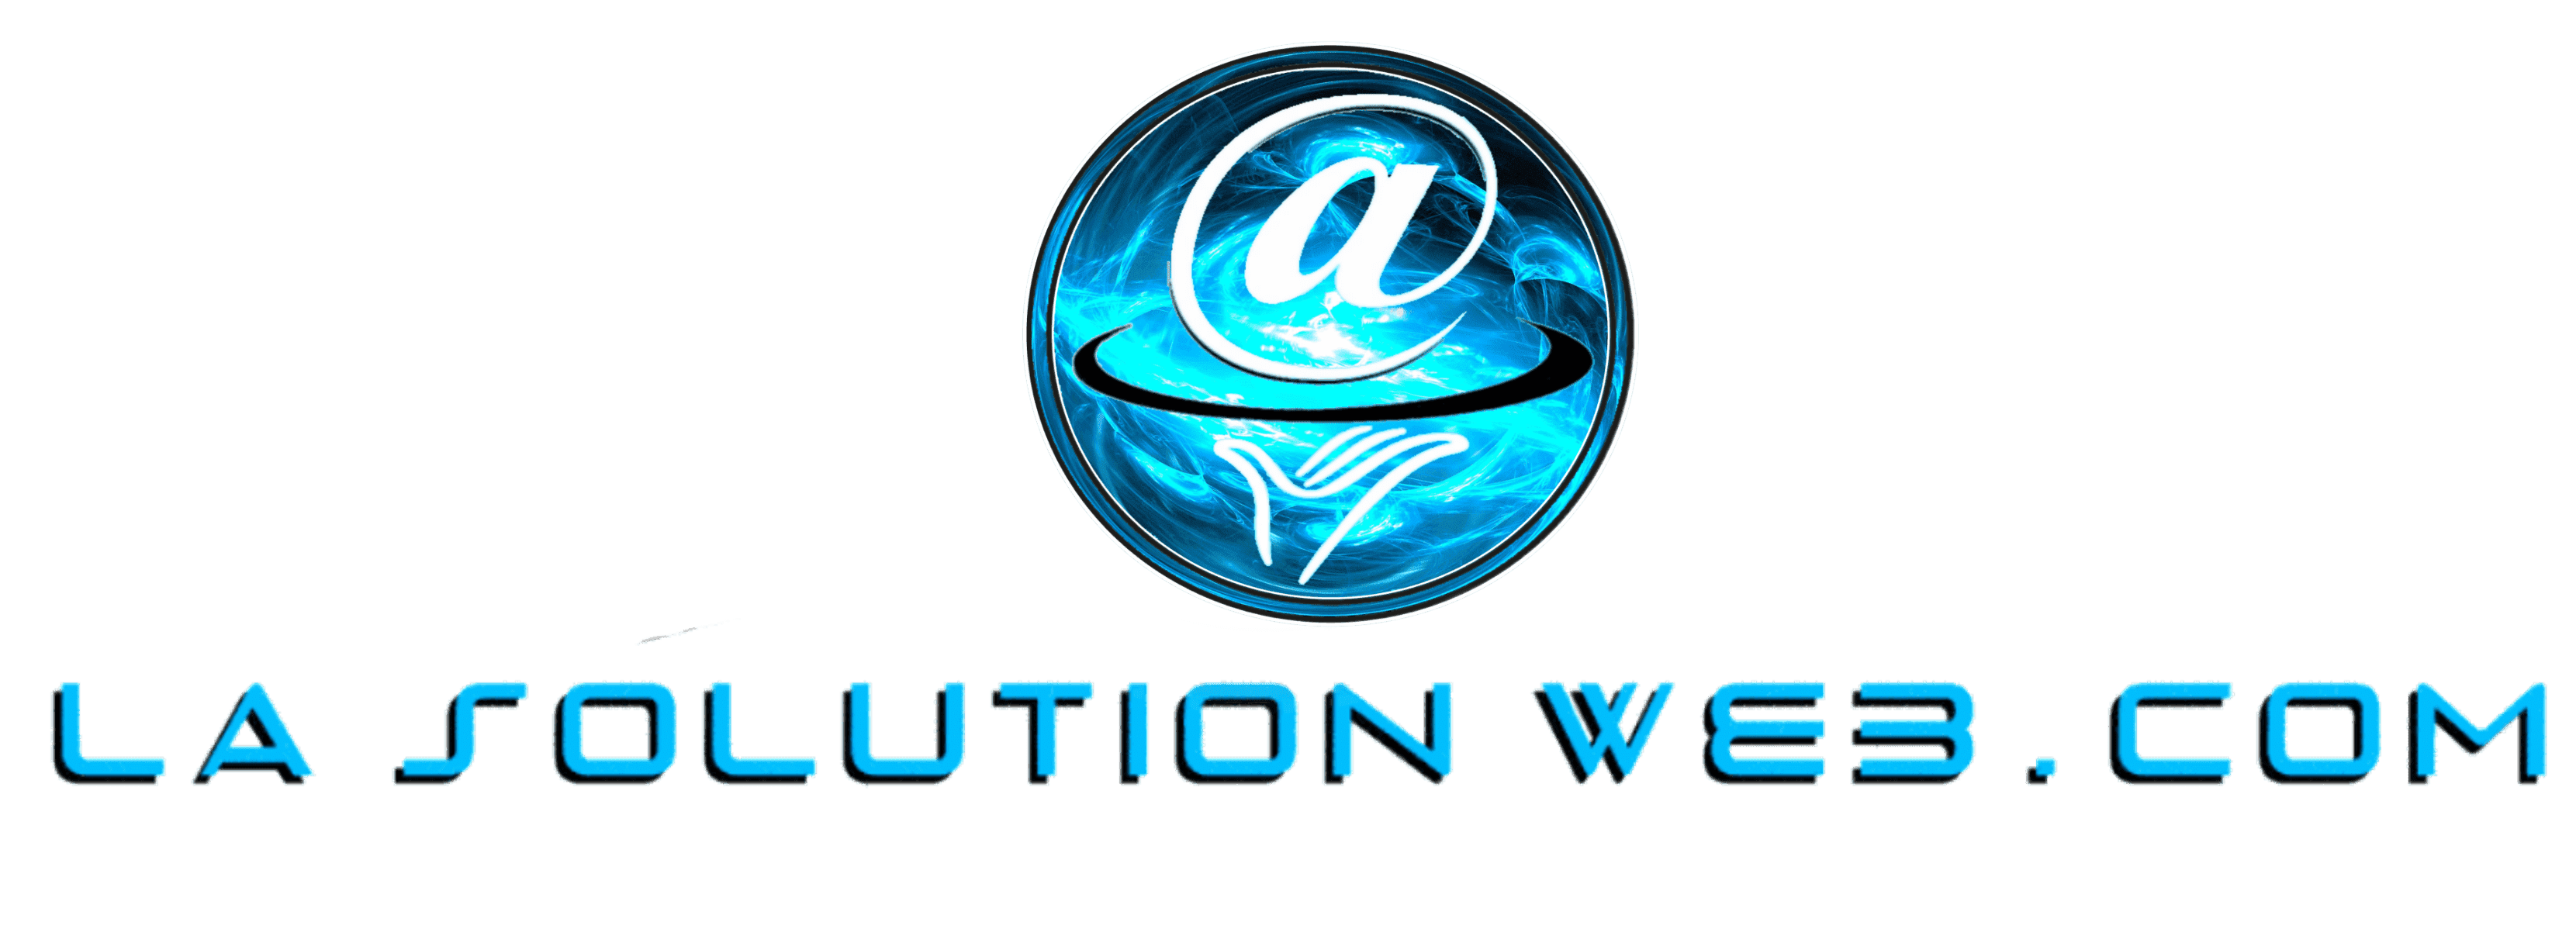 la solution web com logo-